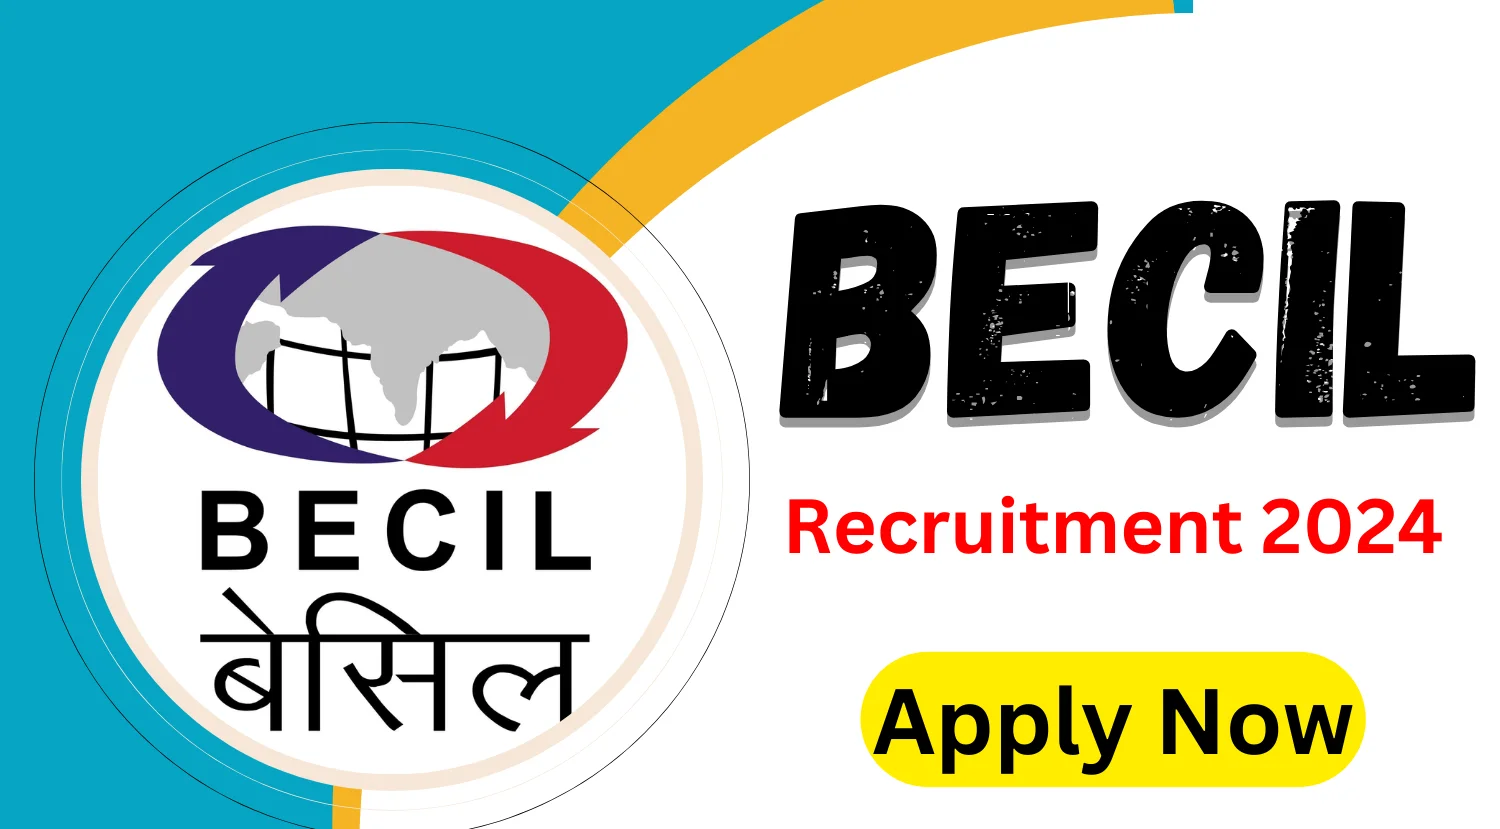 BECIL Recruitment 2024 Notification for Various Engineering Vacancies